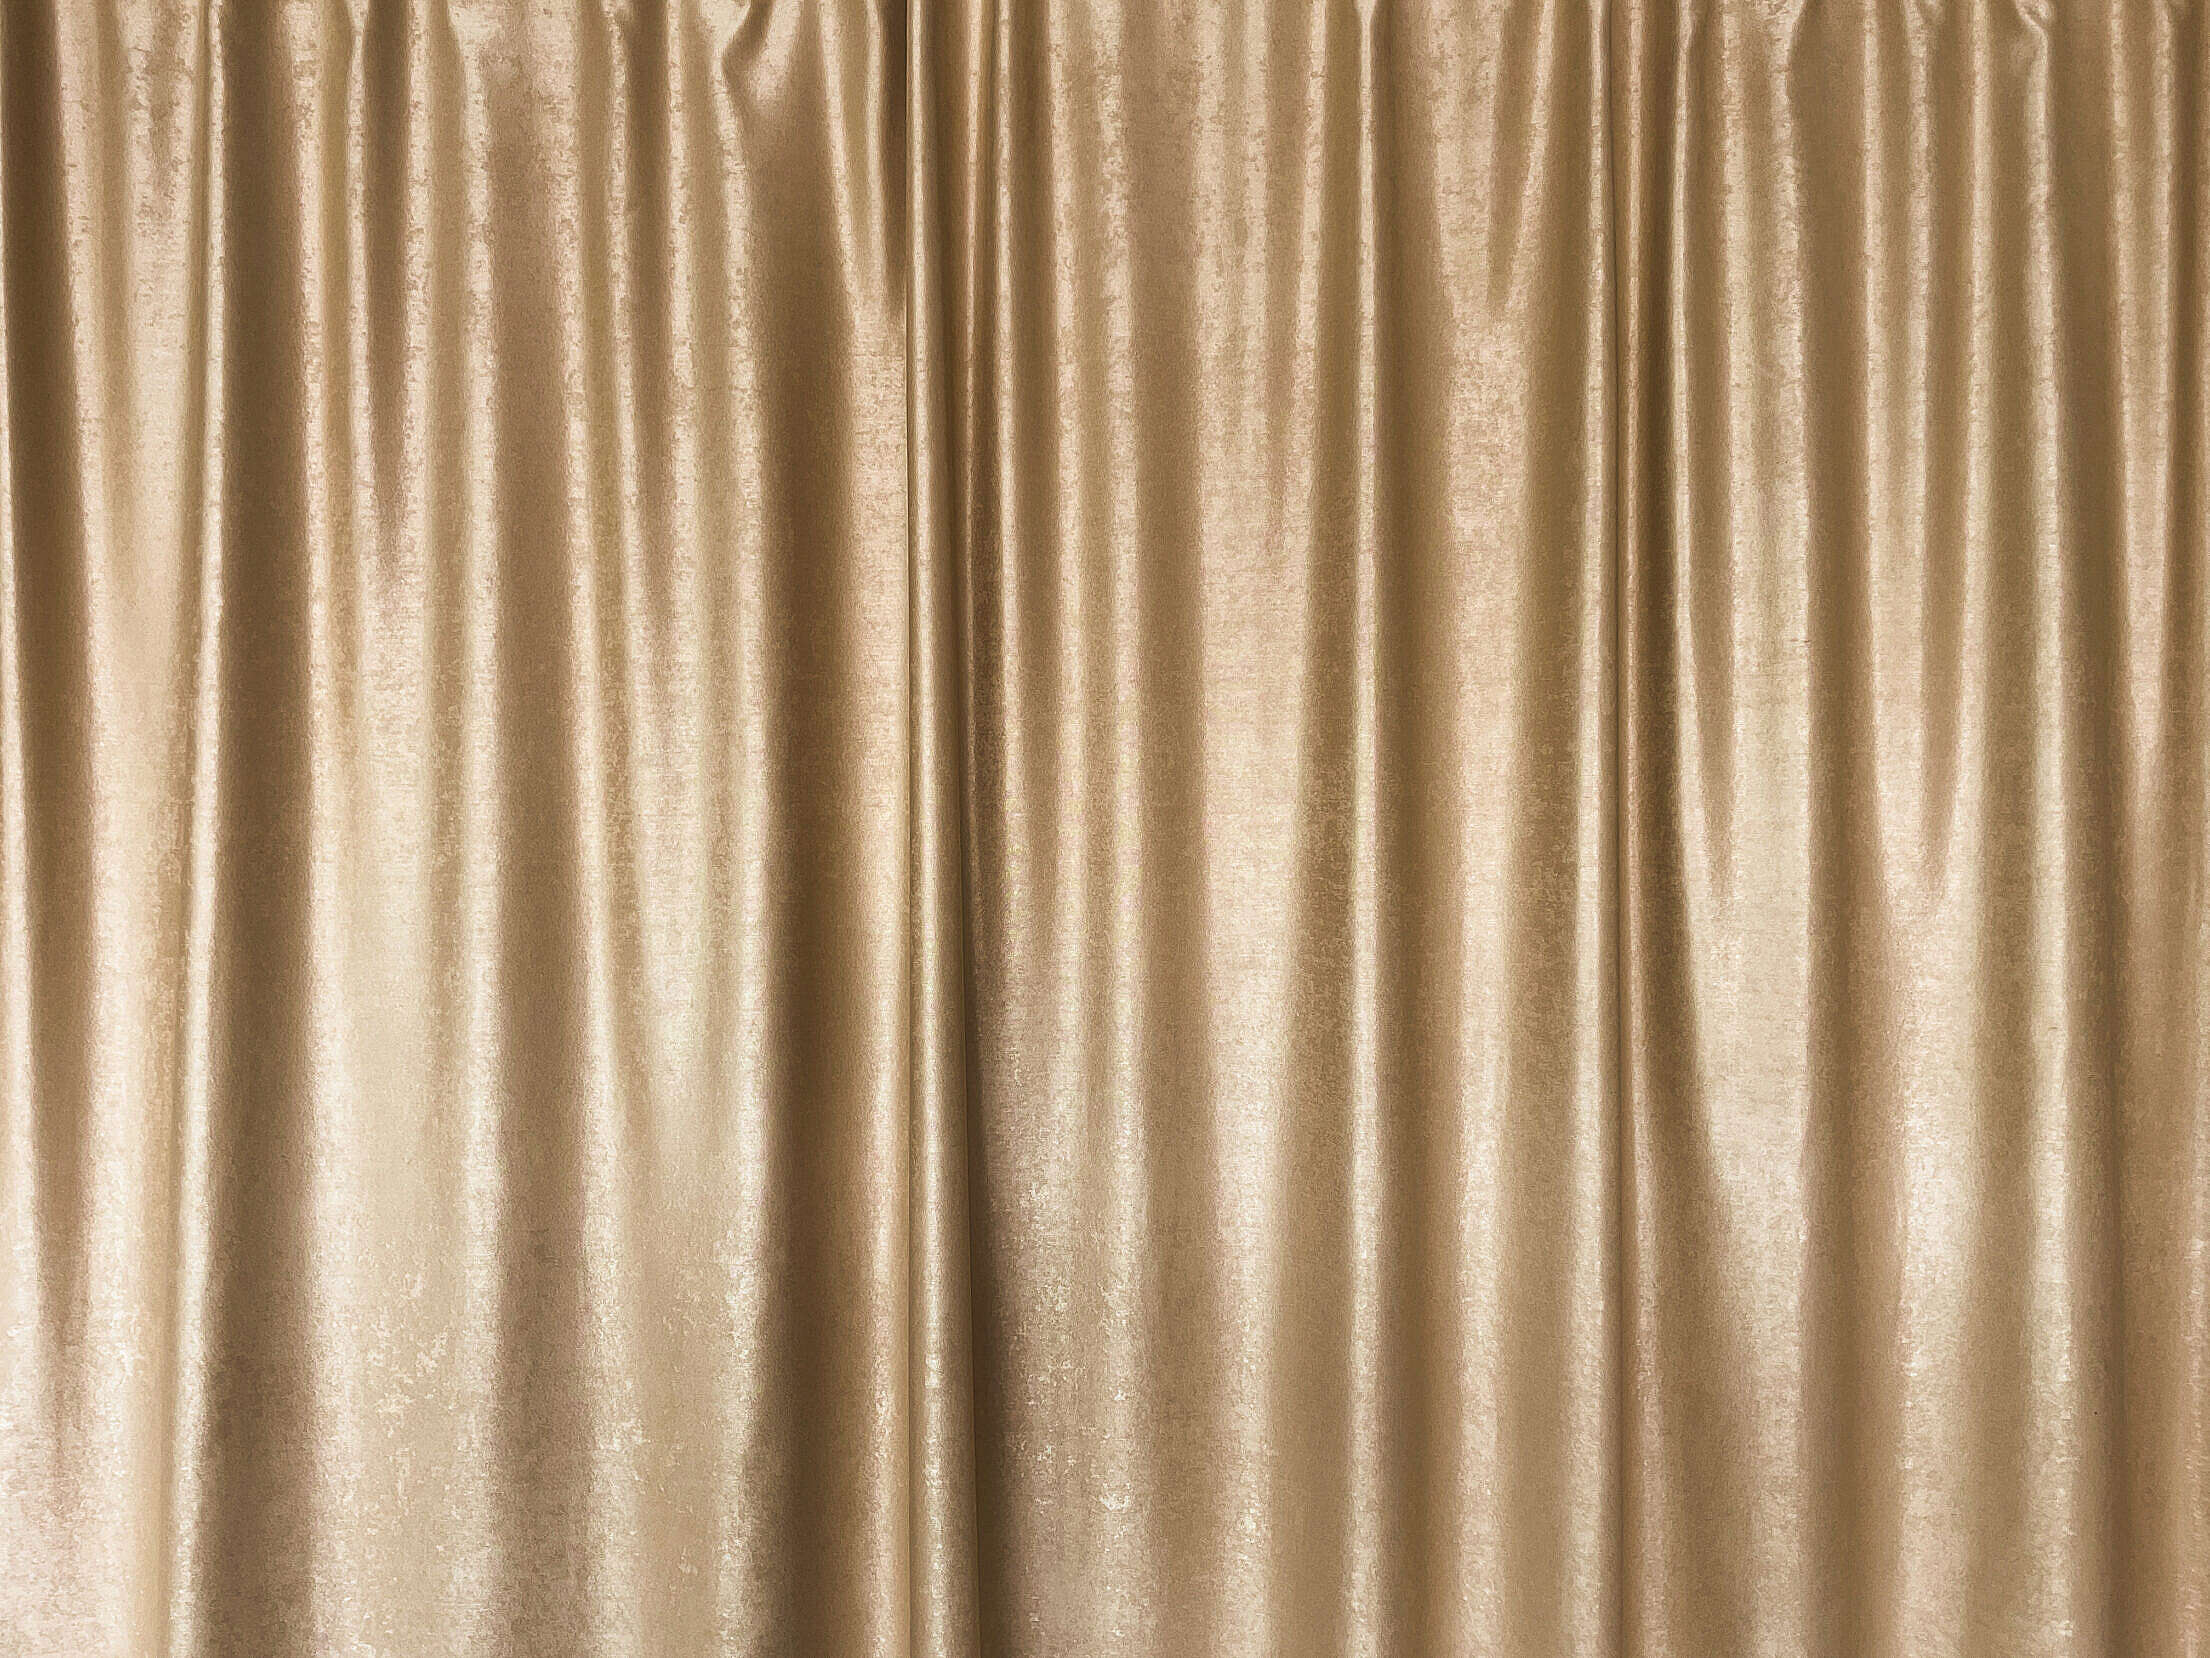 Shiny Golden Curtain Background Free Stock Photo